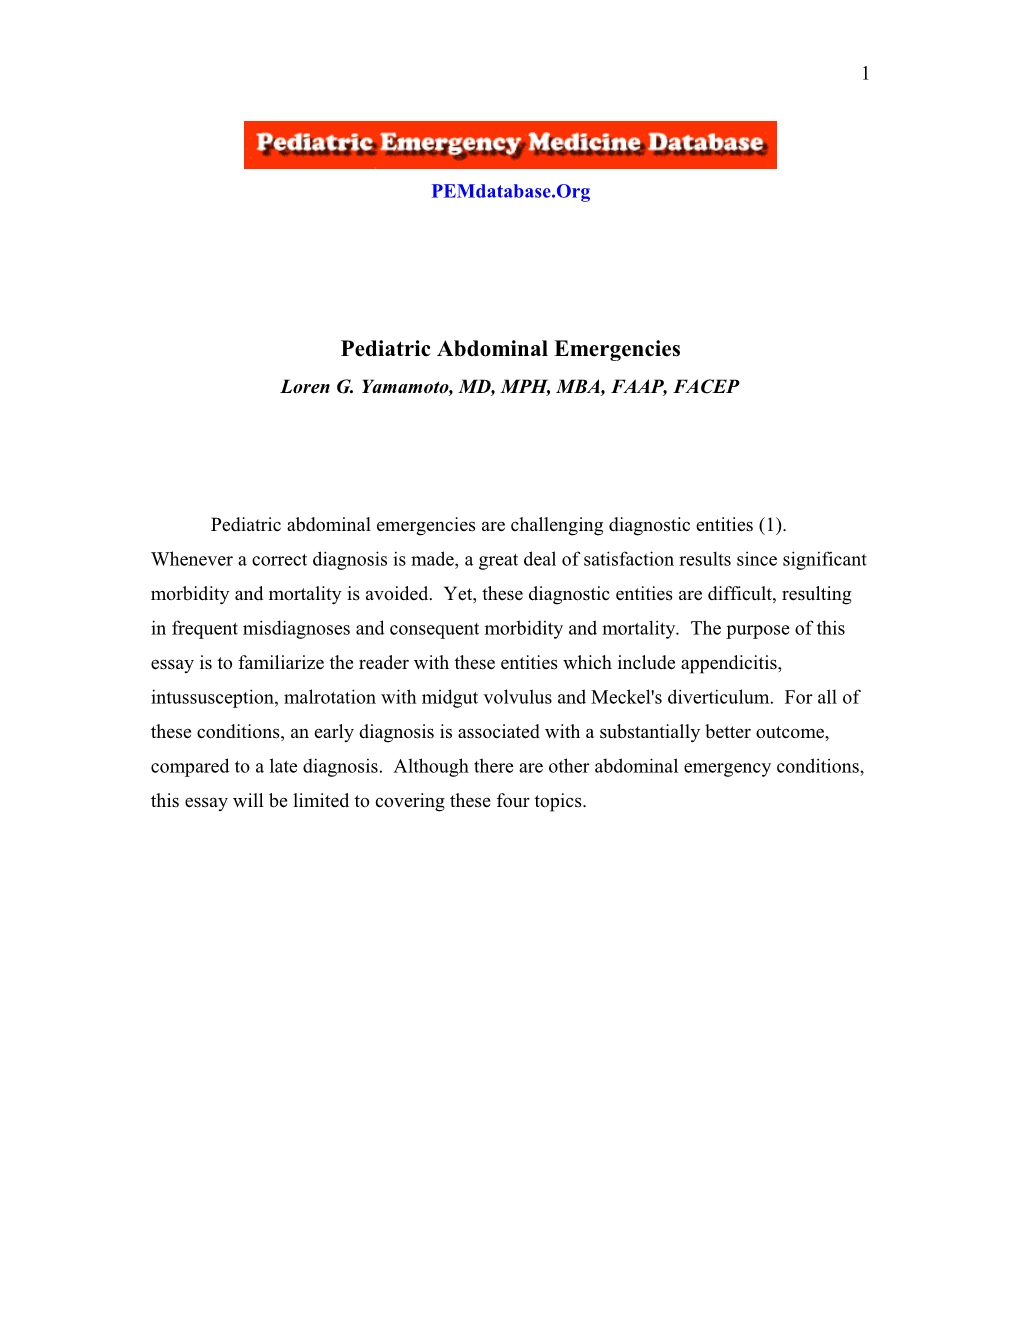 Pediatric Abdominal Emergencies